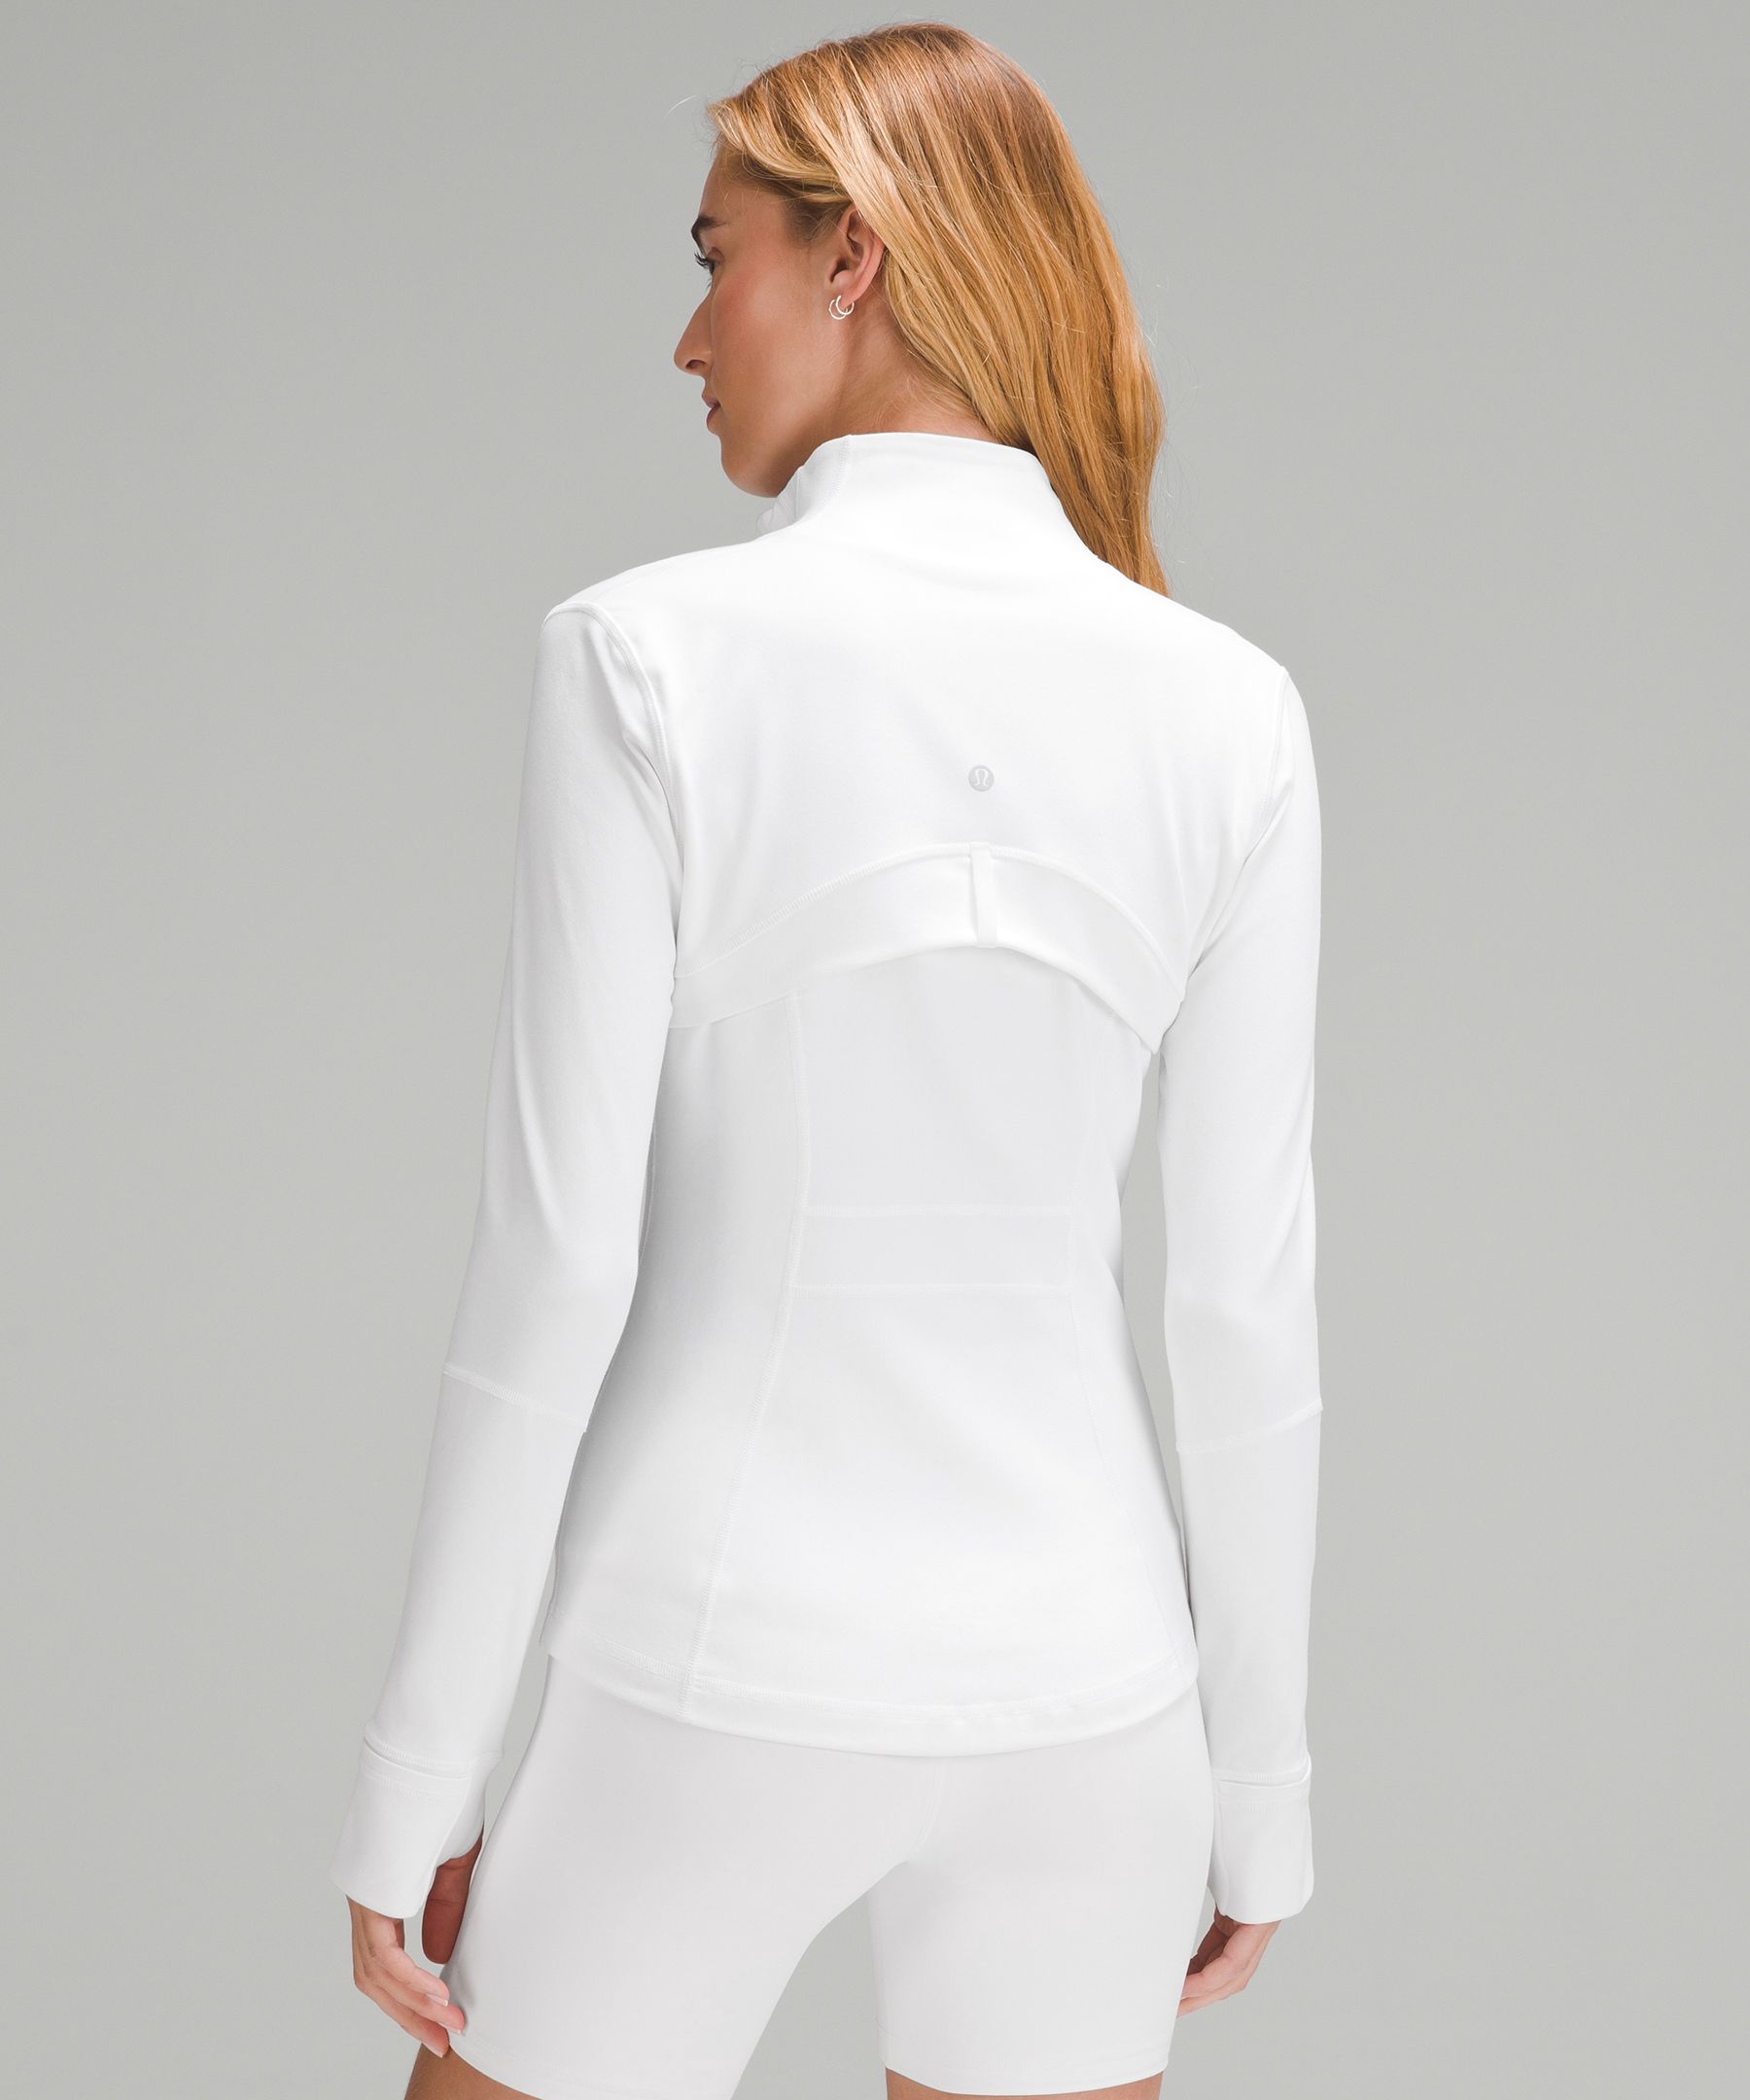 The define jacket in white is so superiorrrrr >>>>>>>> 😍😍😍 #lululem, White Define Jacket